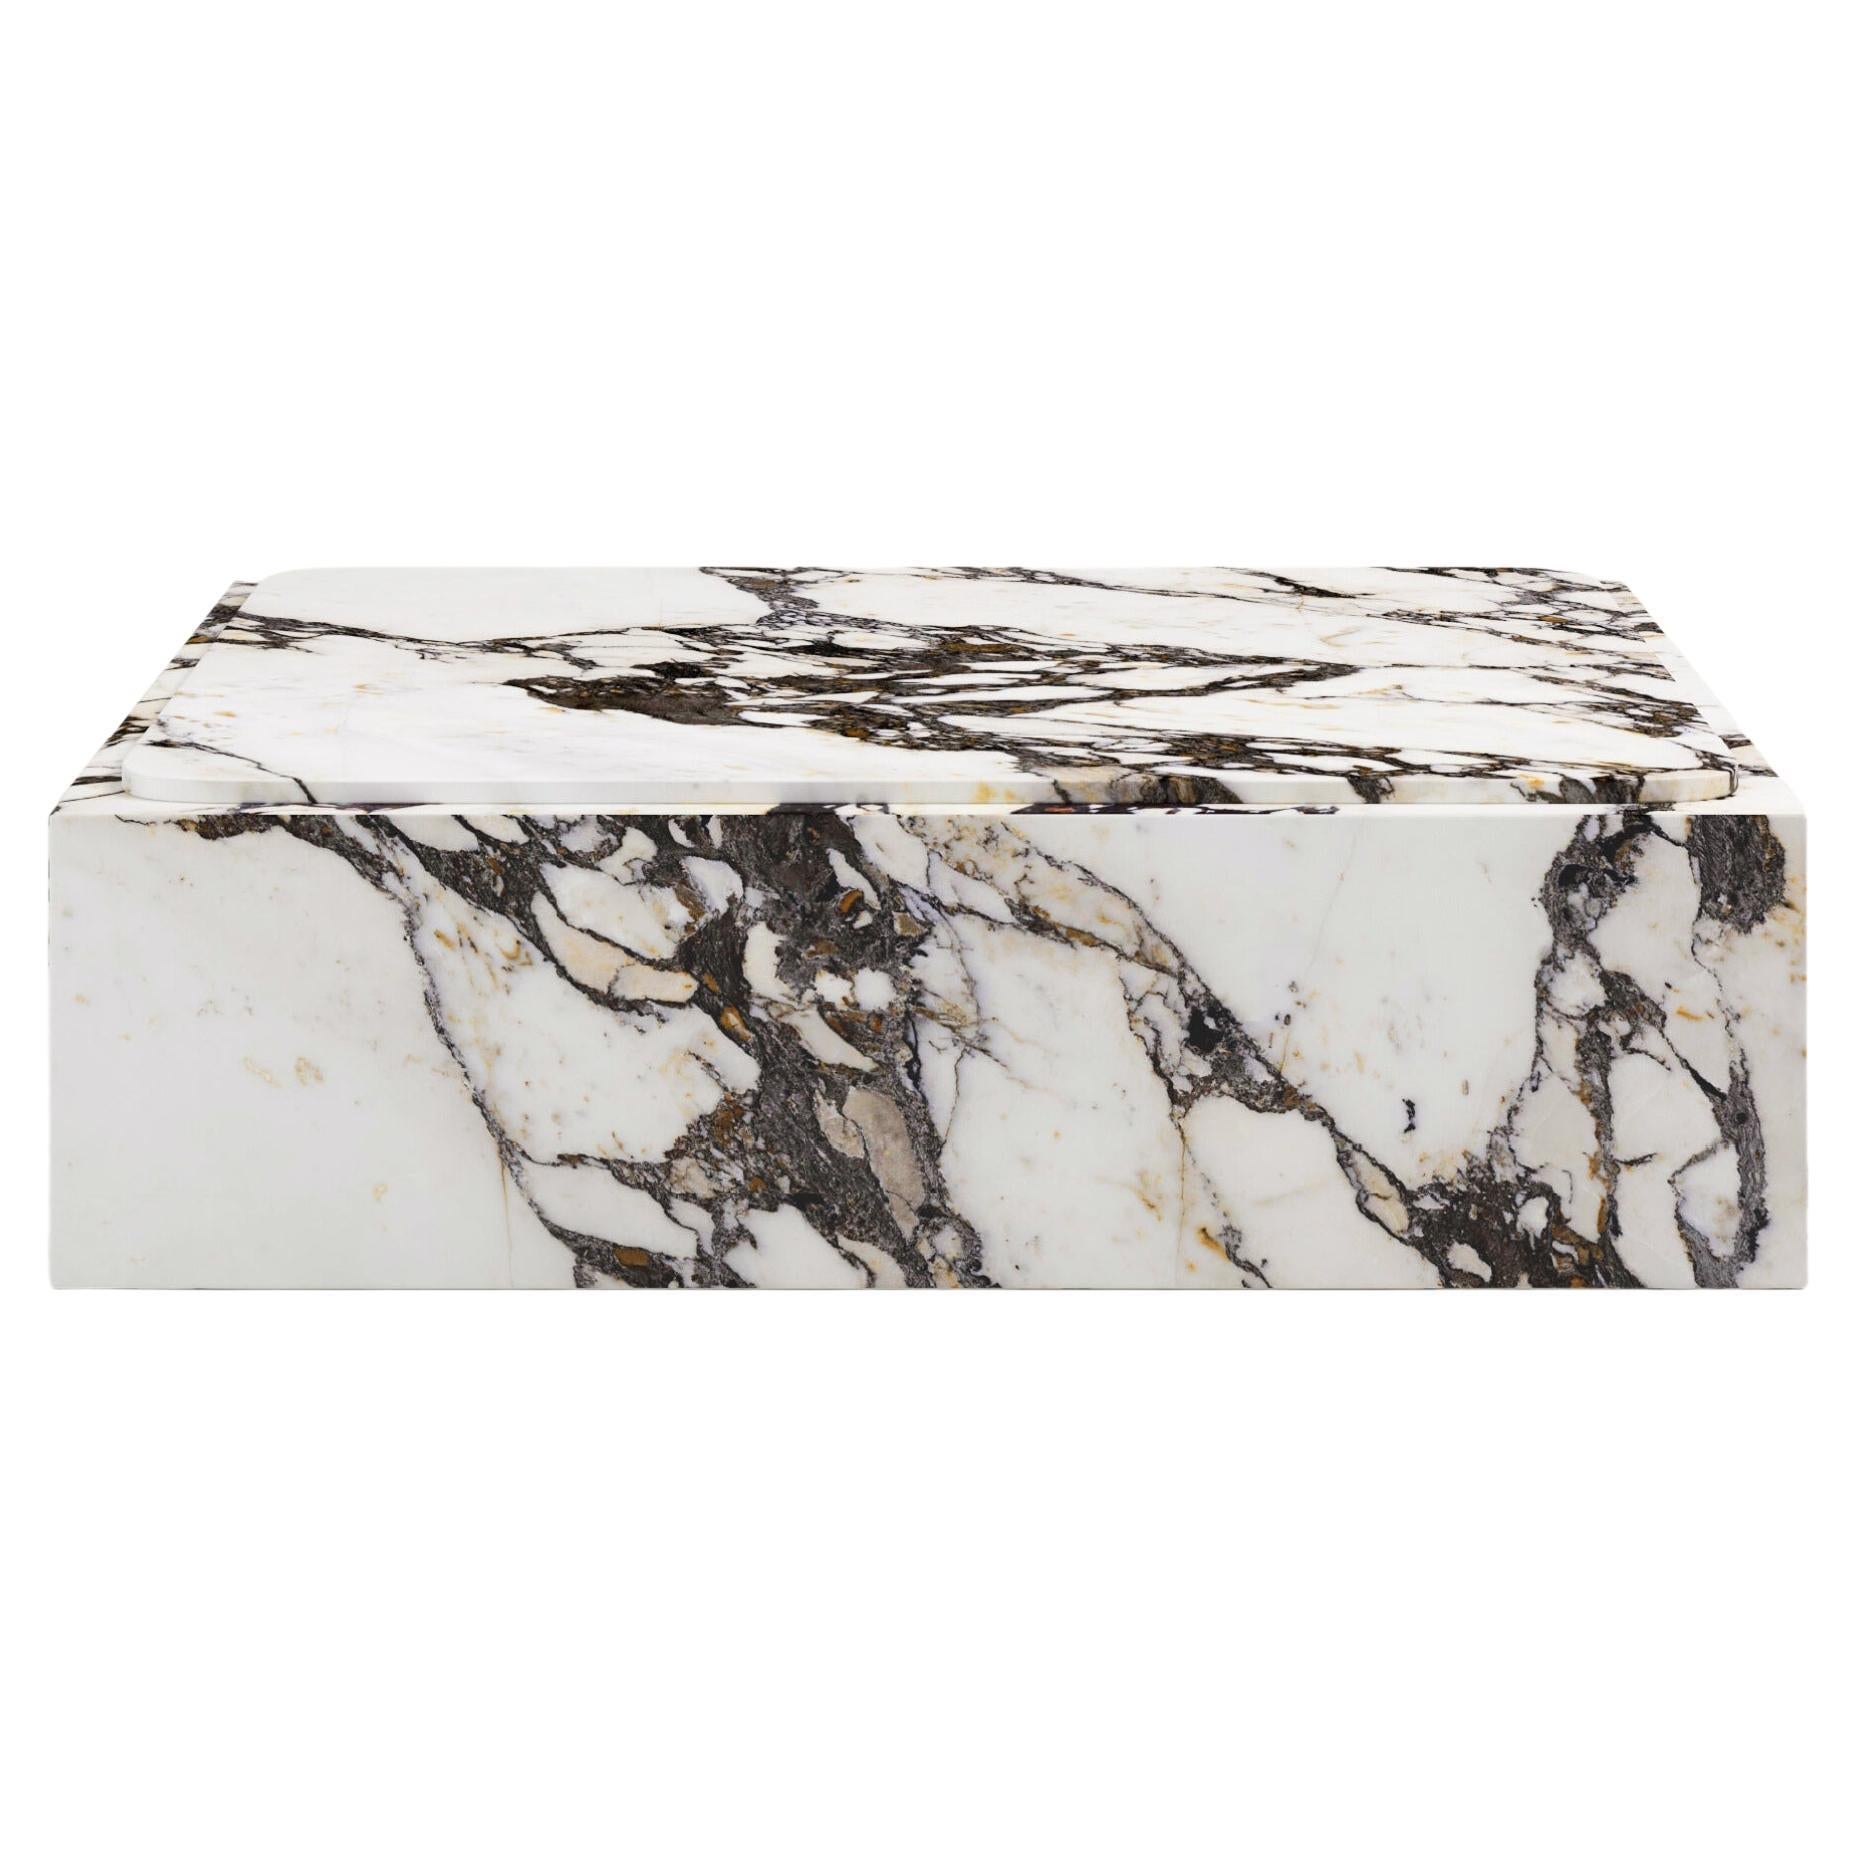 FORM(LA) Cubo Square Plinth Coffee Table 60”L x 60”W x 13”H Calacatta Marble For Sale